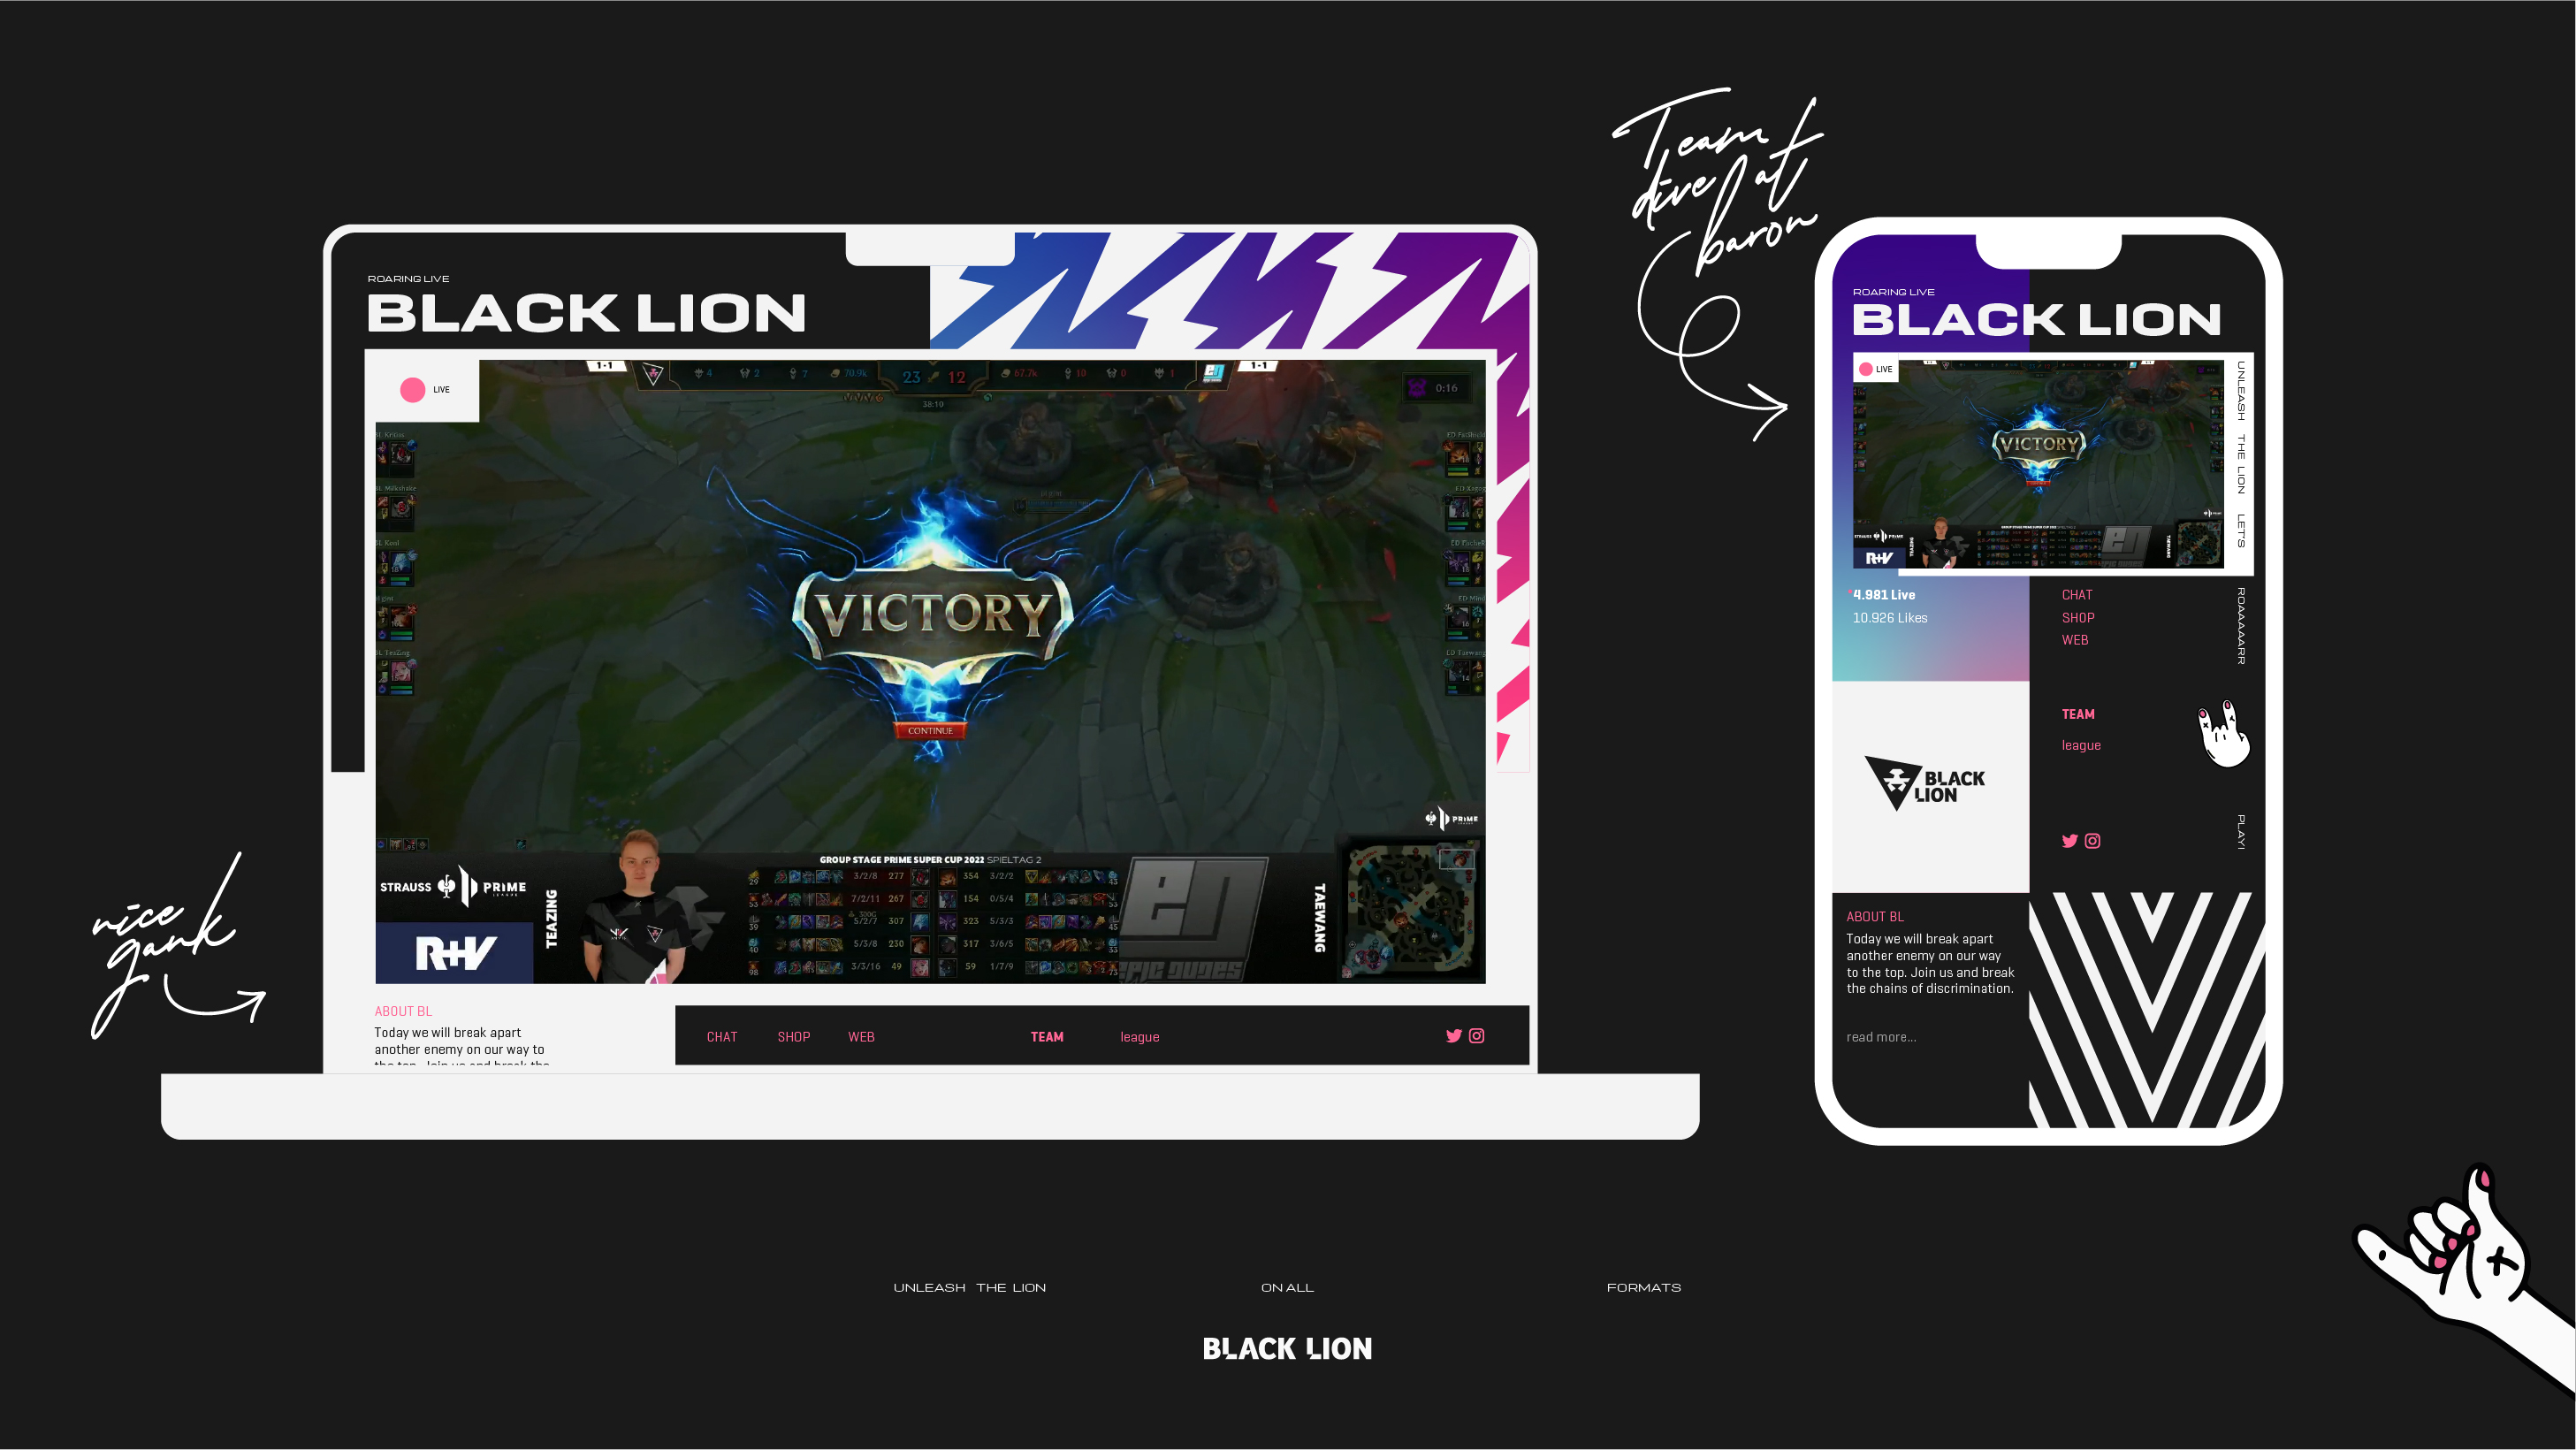 Black Lion: Bringing Diversity into Esports!